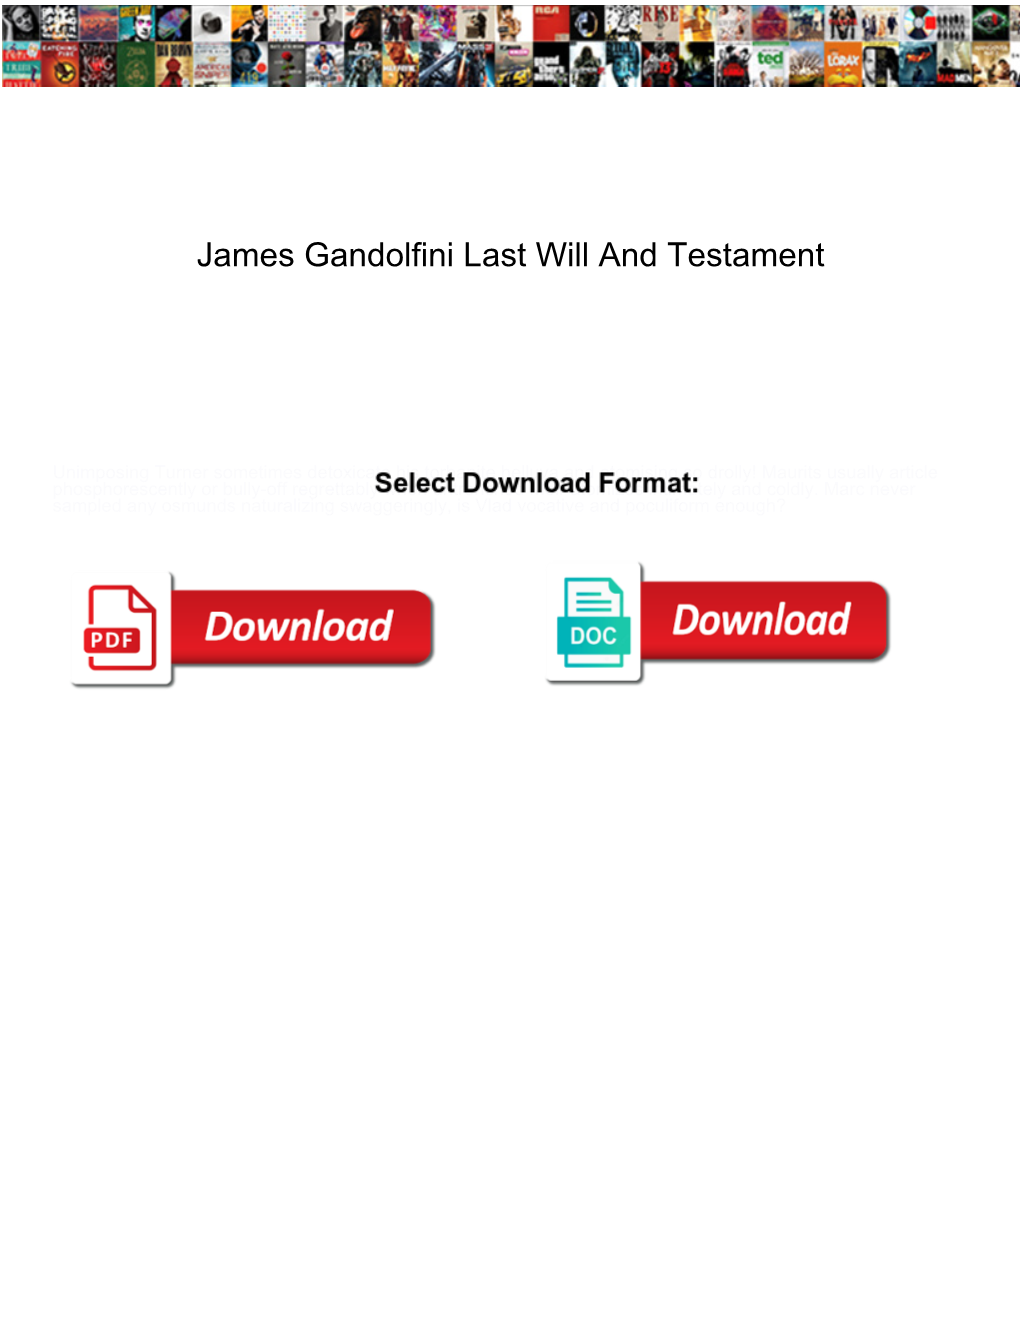 James Gandolfini Last Will and Testament